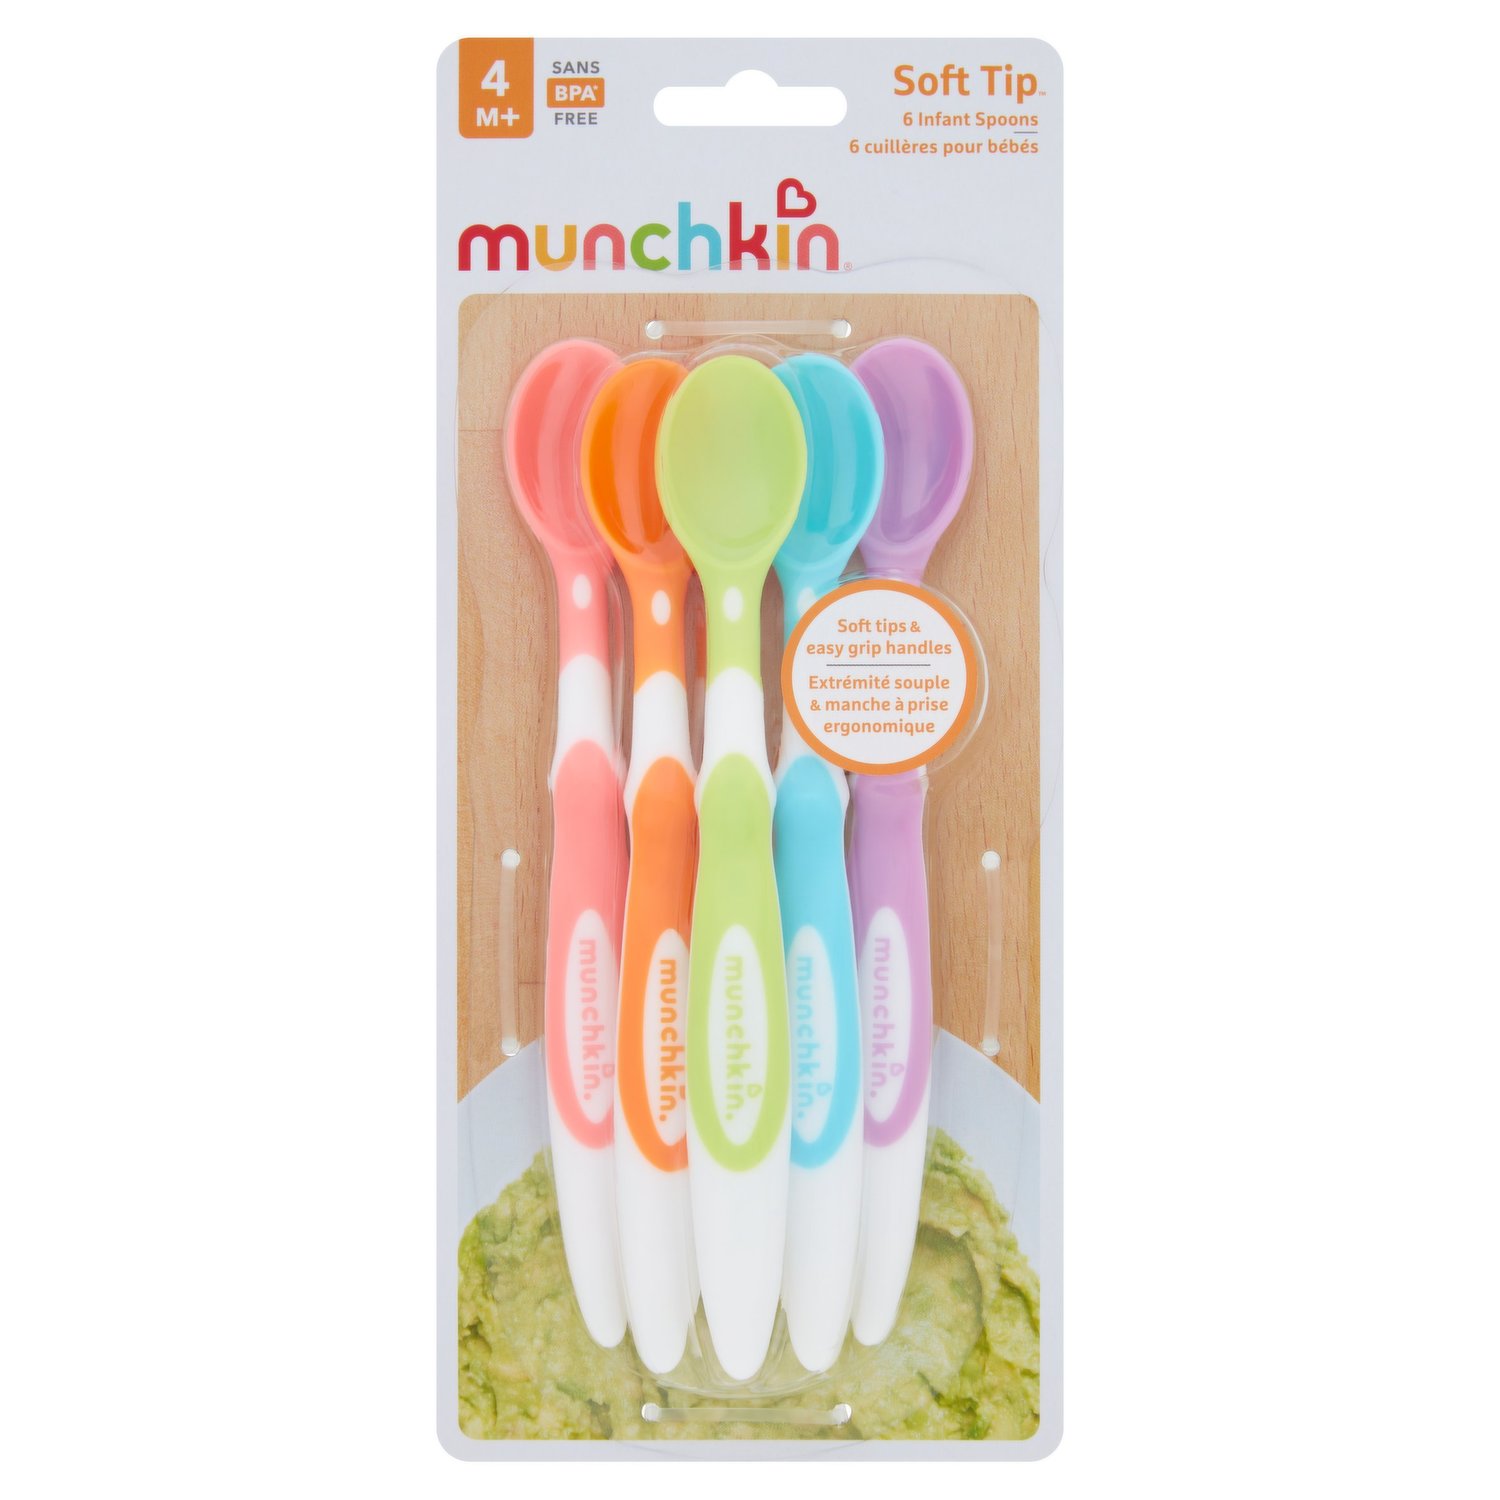 Save on Munchkin Soft-Tip Infant Spoons Order Online Delivery